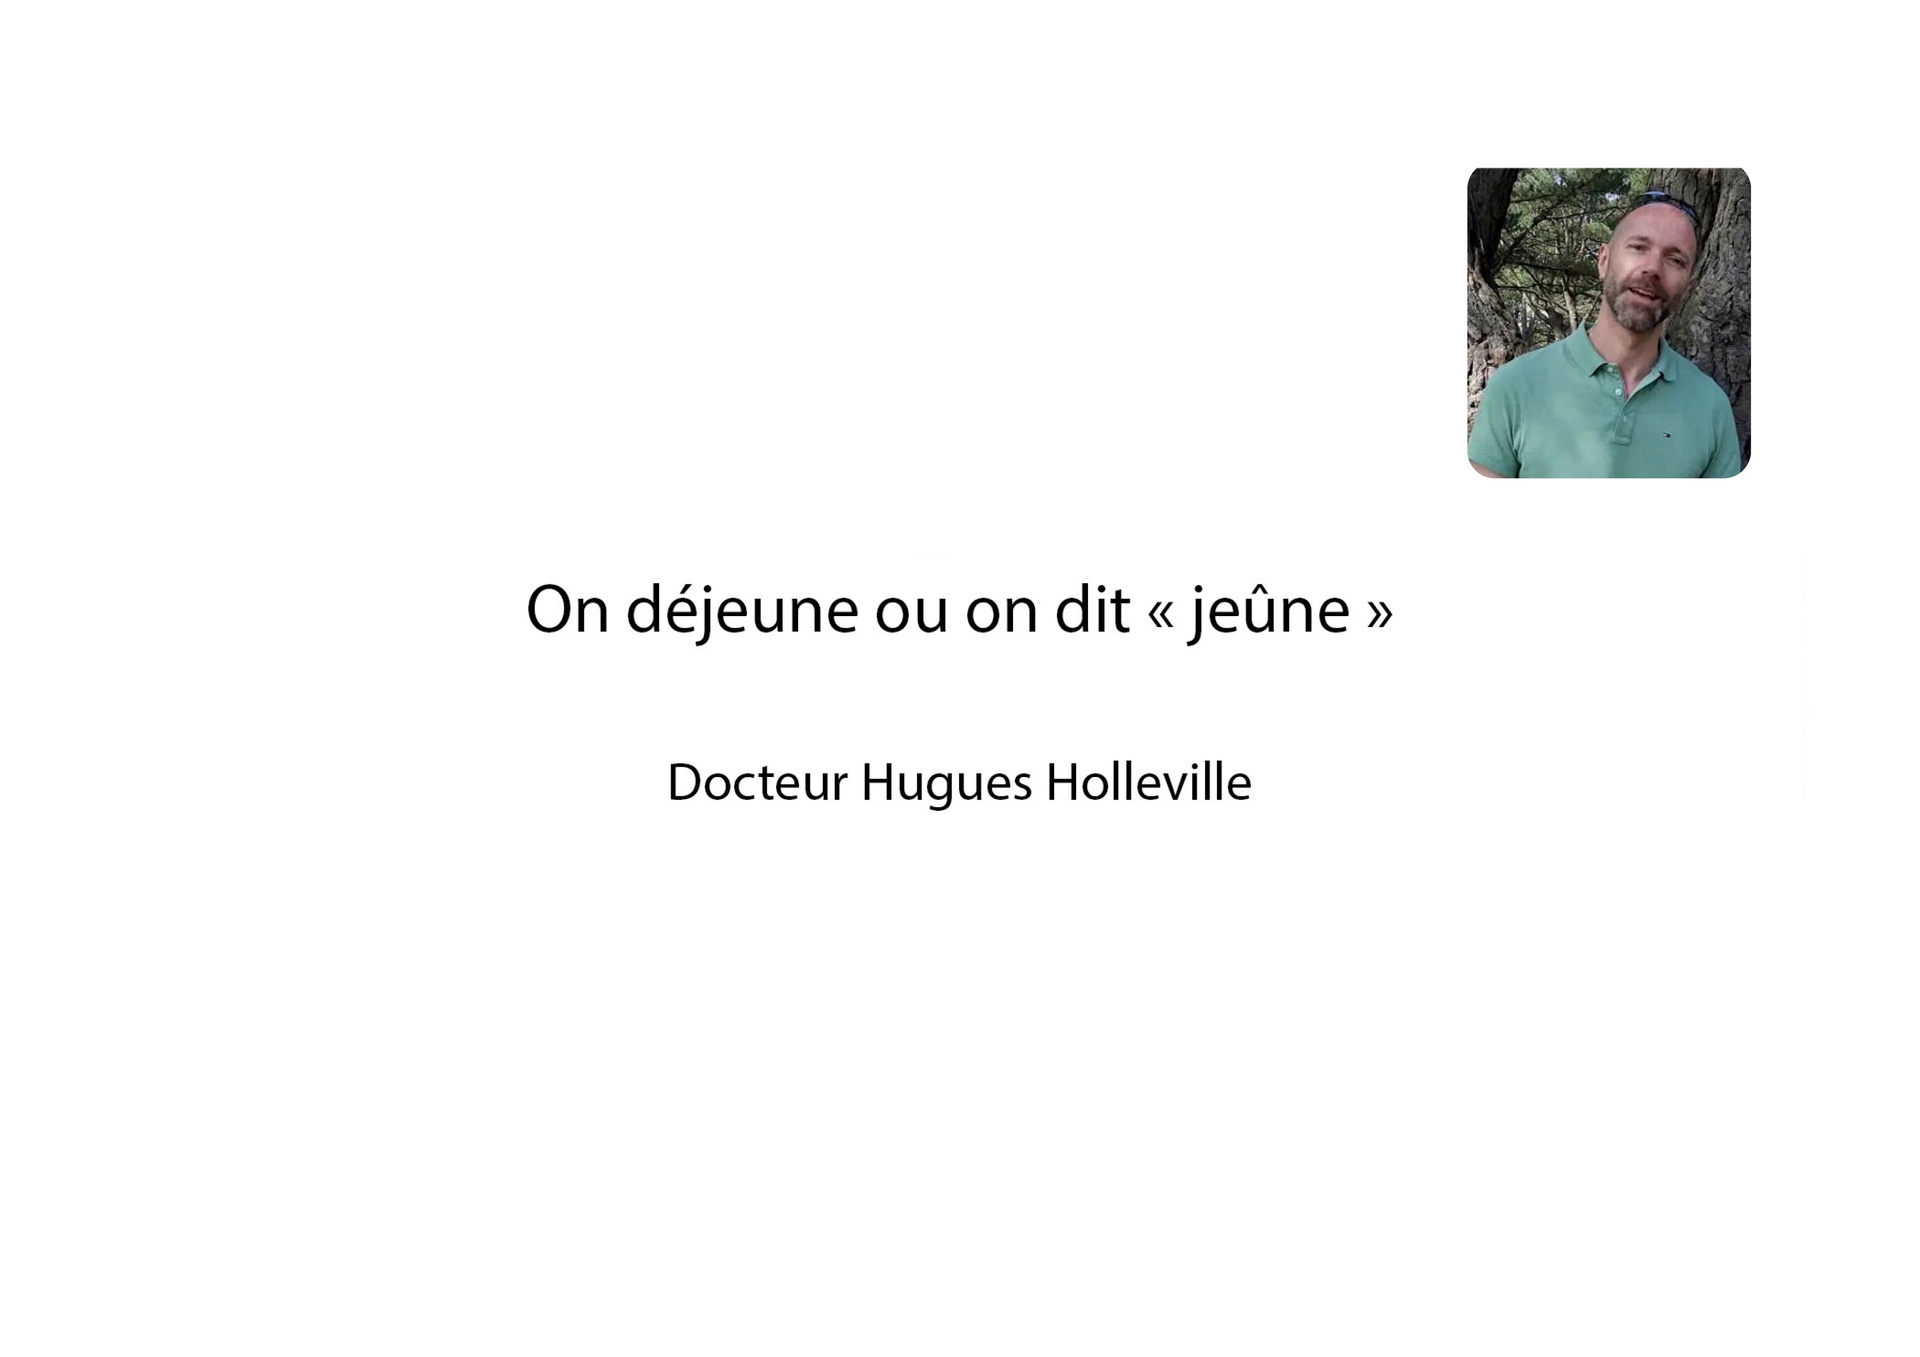 On déjeune ou on dit jeûne - Dr Hugues Holleville